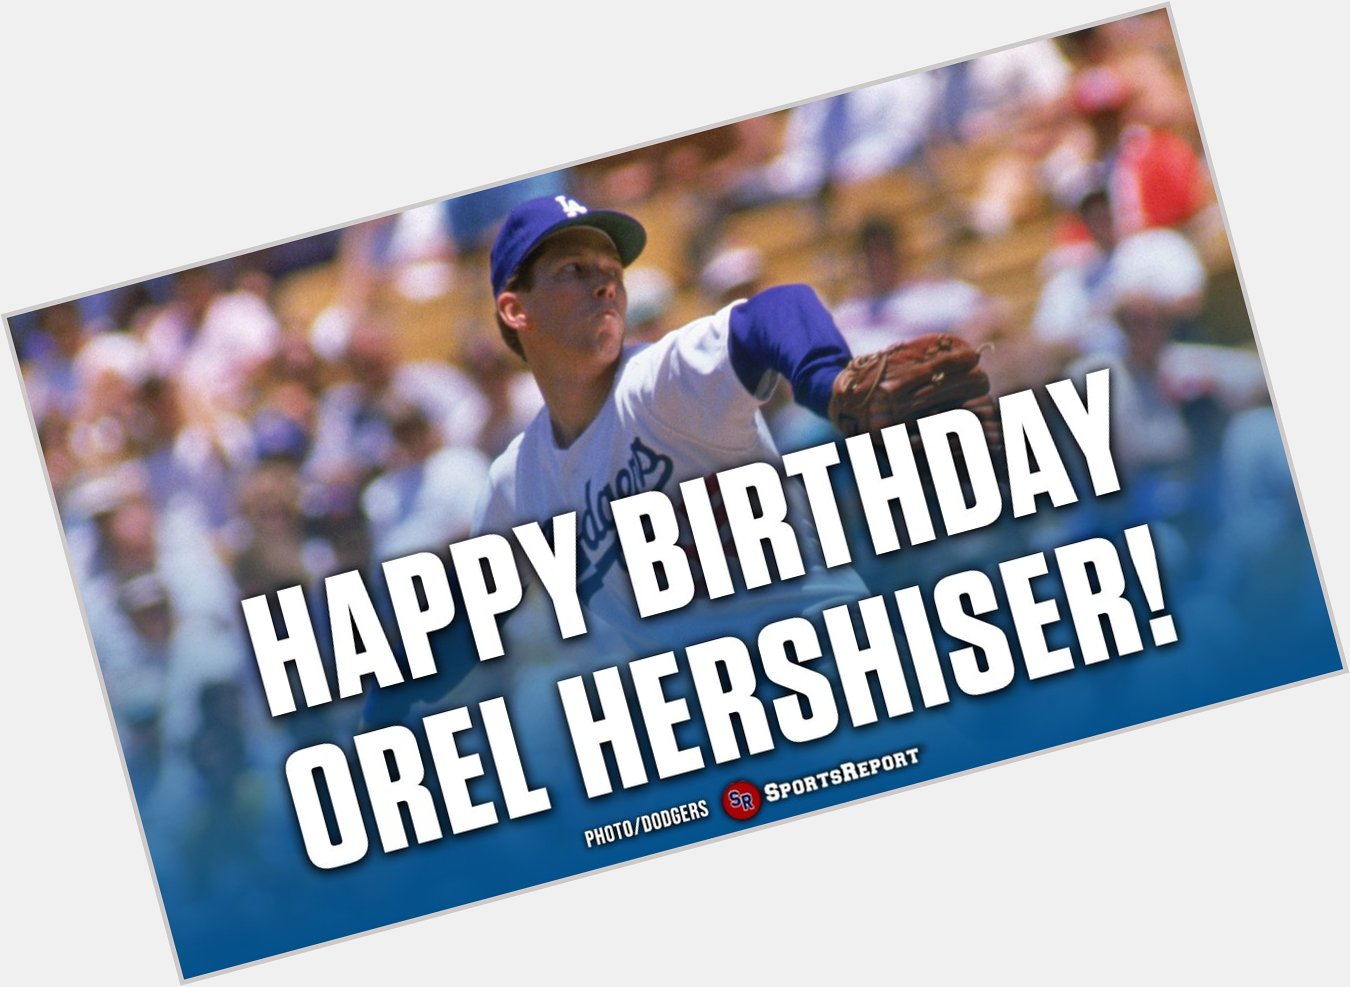  Fans, let\s wish legend Orel Hershiser a Happy Birthday! GO DODGERS!! 